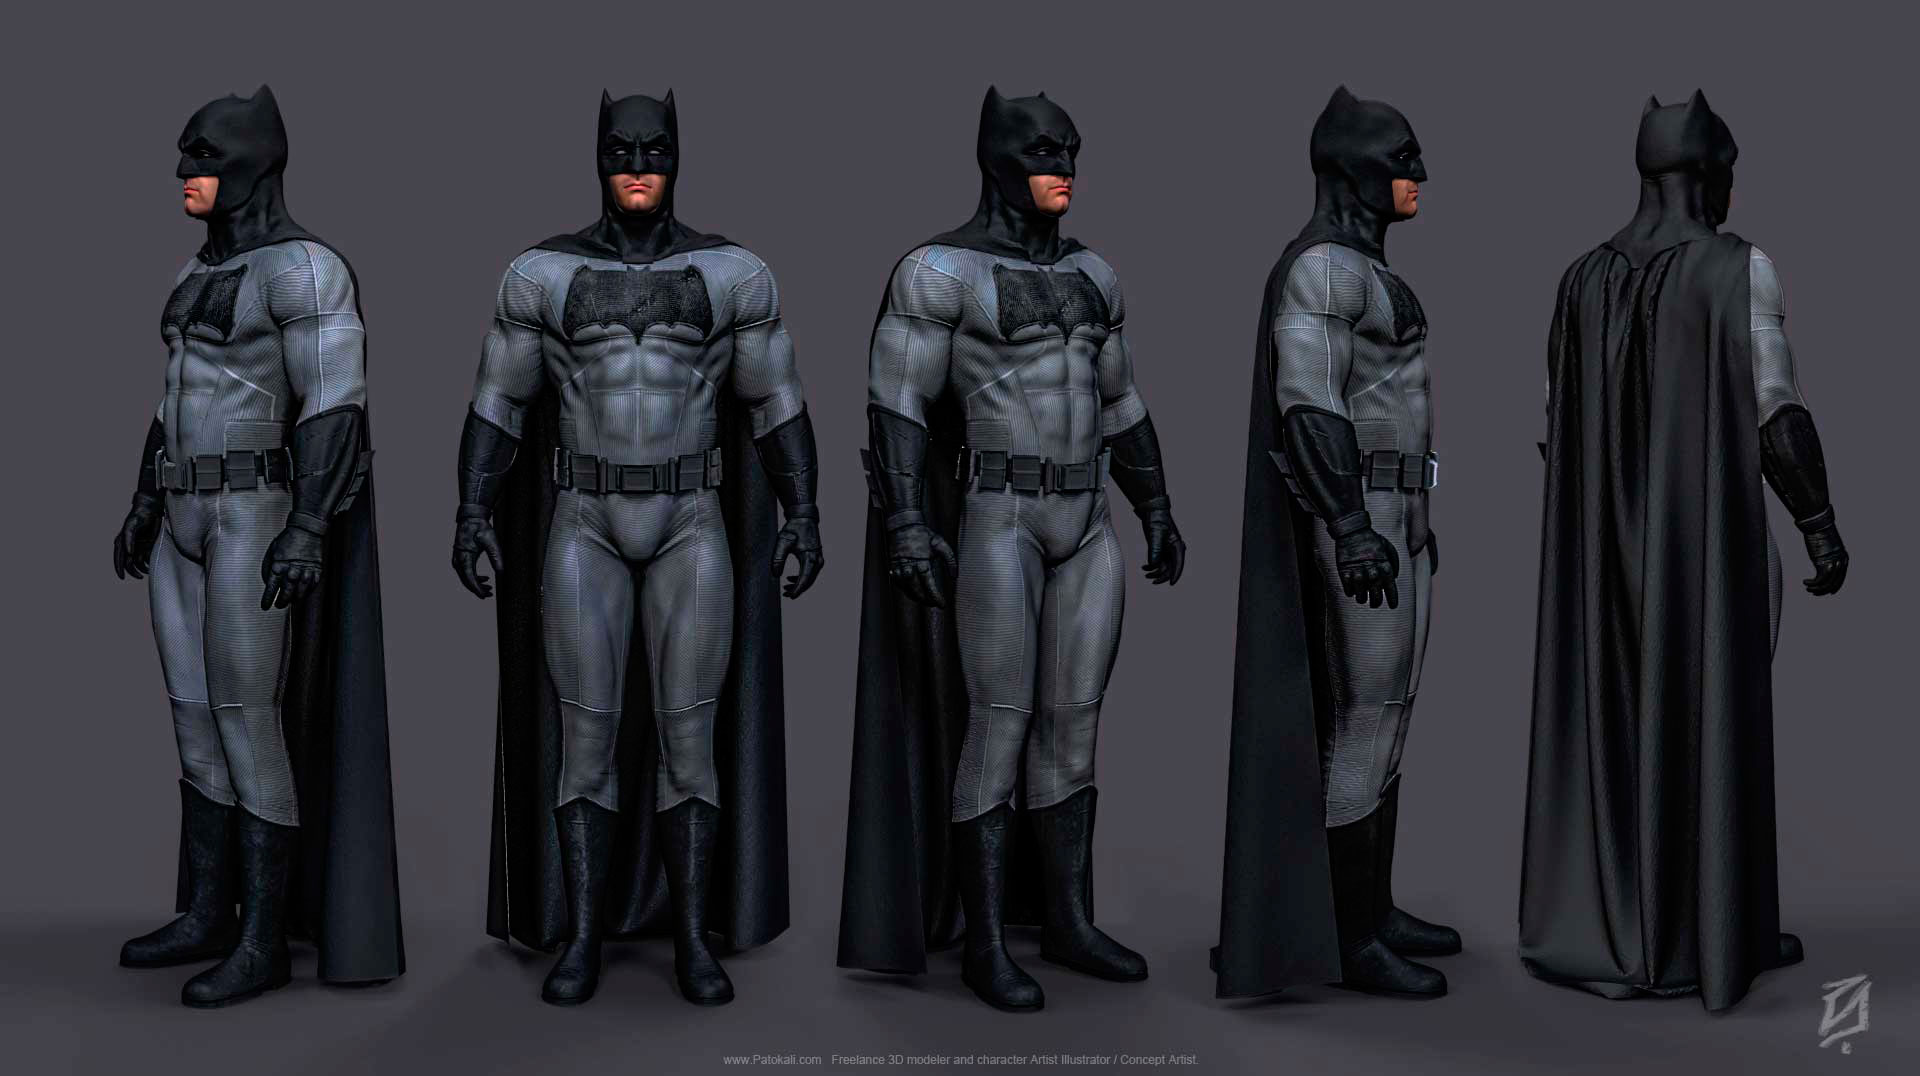 Костюм бэтмена мод. Брюс Уэйн (расширенная Вселенная DC). Бэт броня. Бэтмен против Супермена костюм Бэтмена. Бронированный костюм Бэтмена.